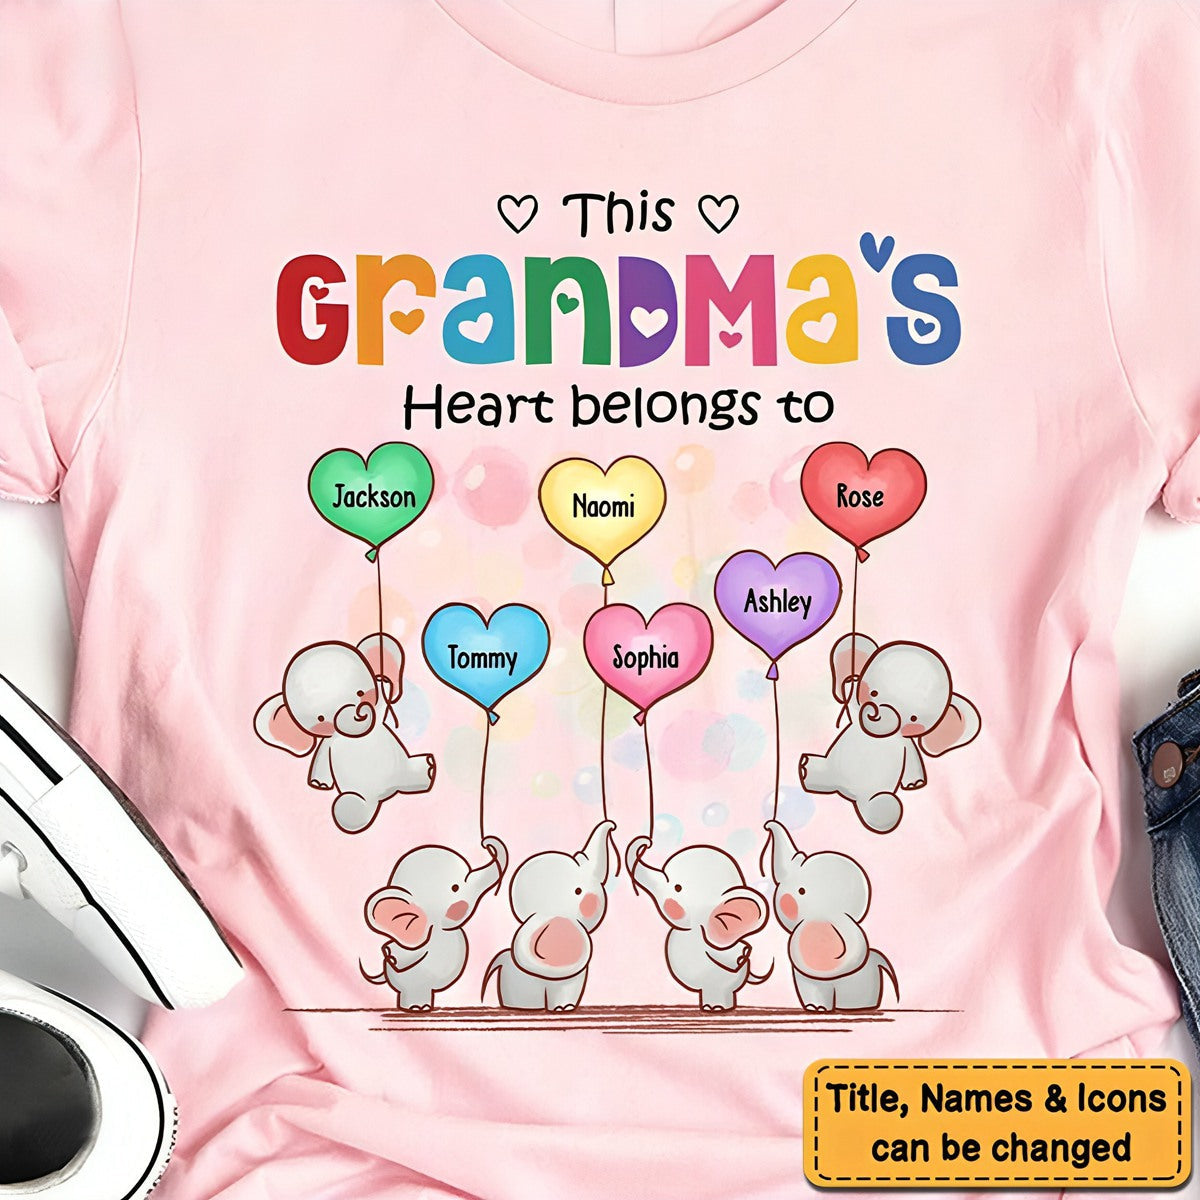 Gift For Grandma This Grandma's Heart Belongs To Elephants Shirt